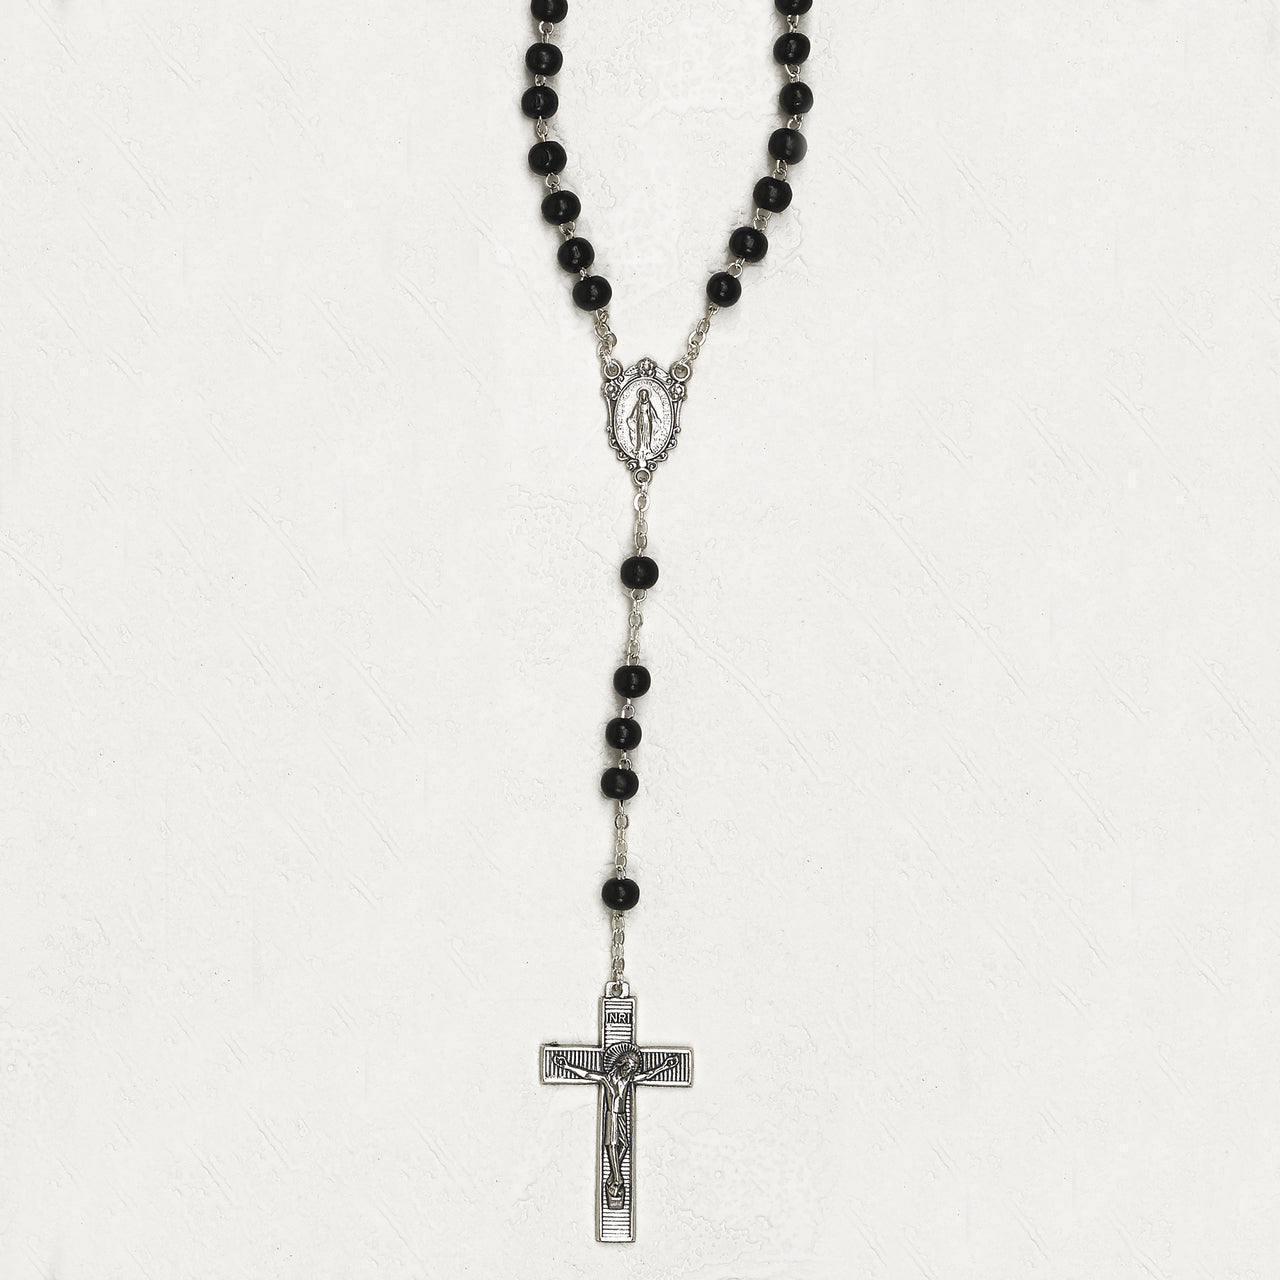 5mm Black Wood Bead Rosary